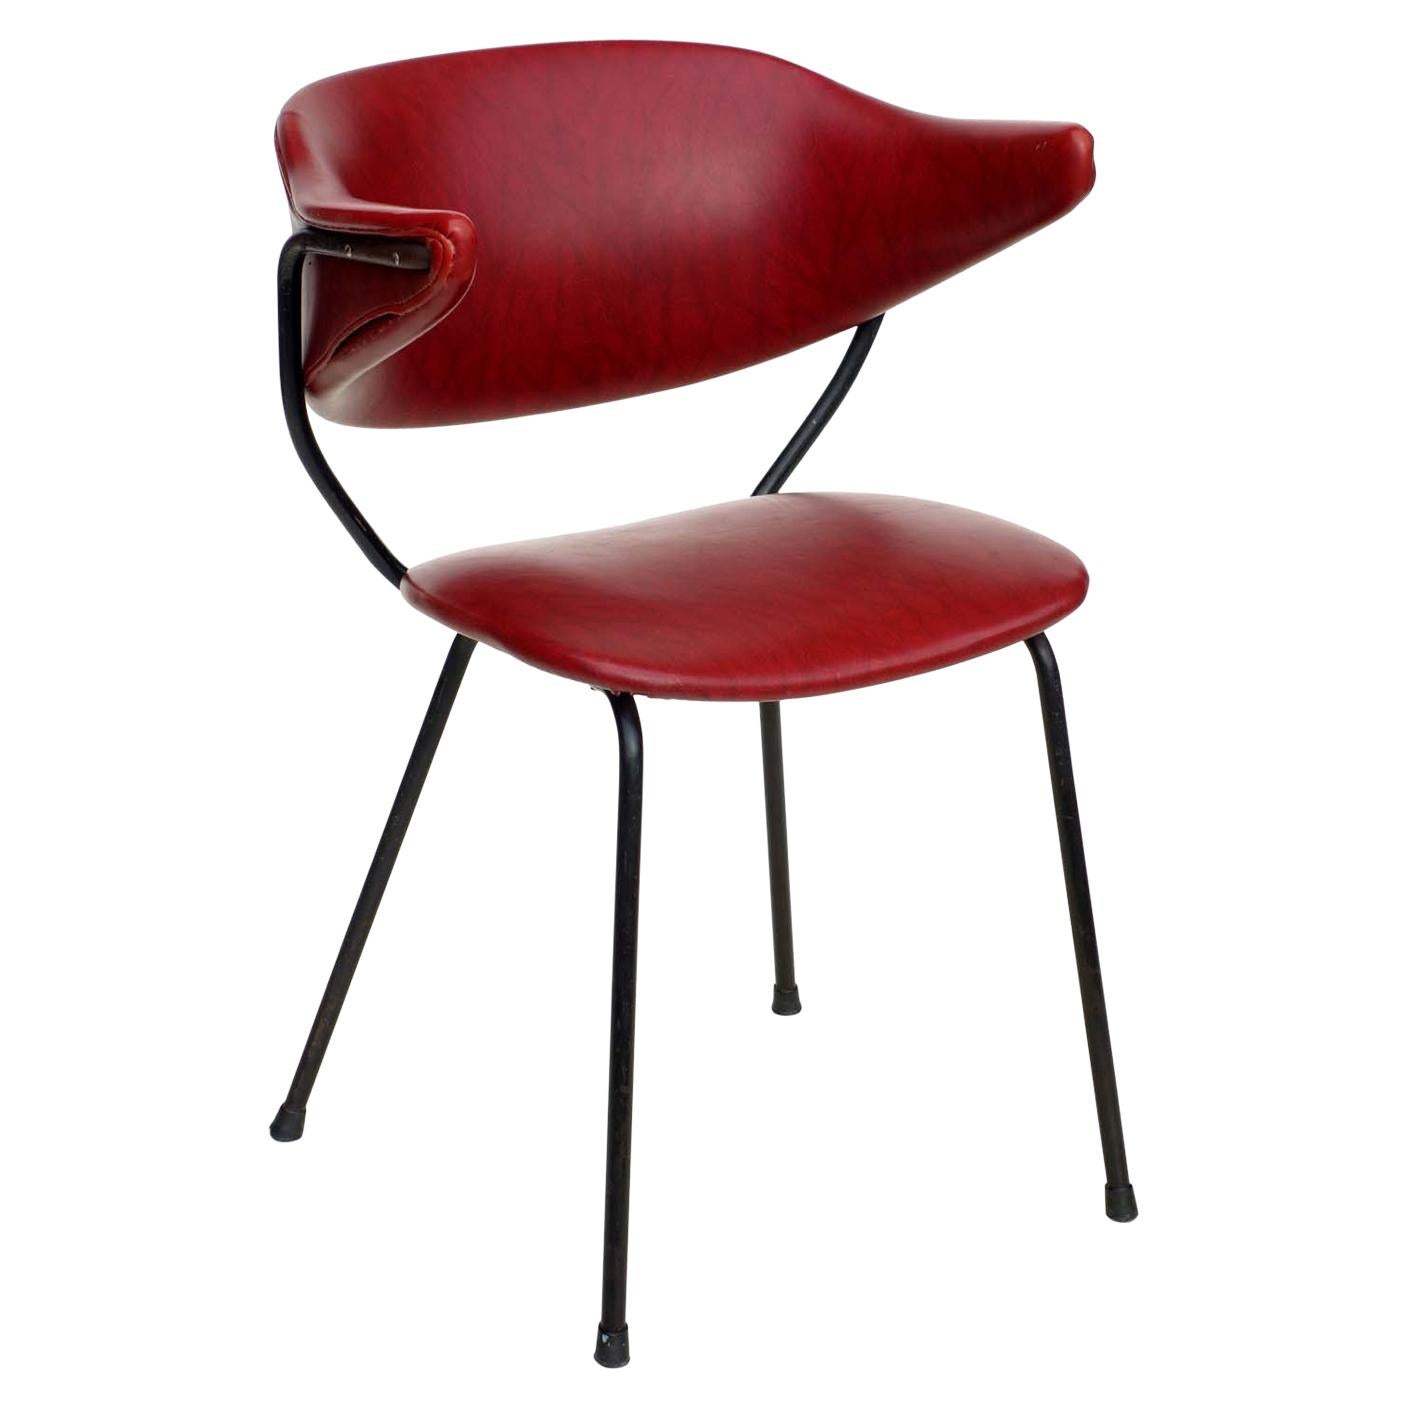 1950s by Gastone Rinaldi for RIMA Midcentury Italian Design Chair